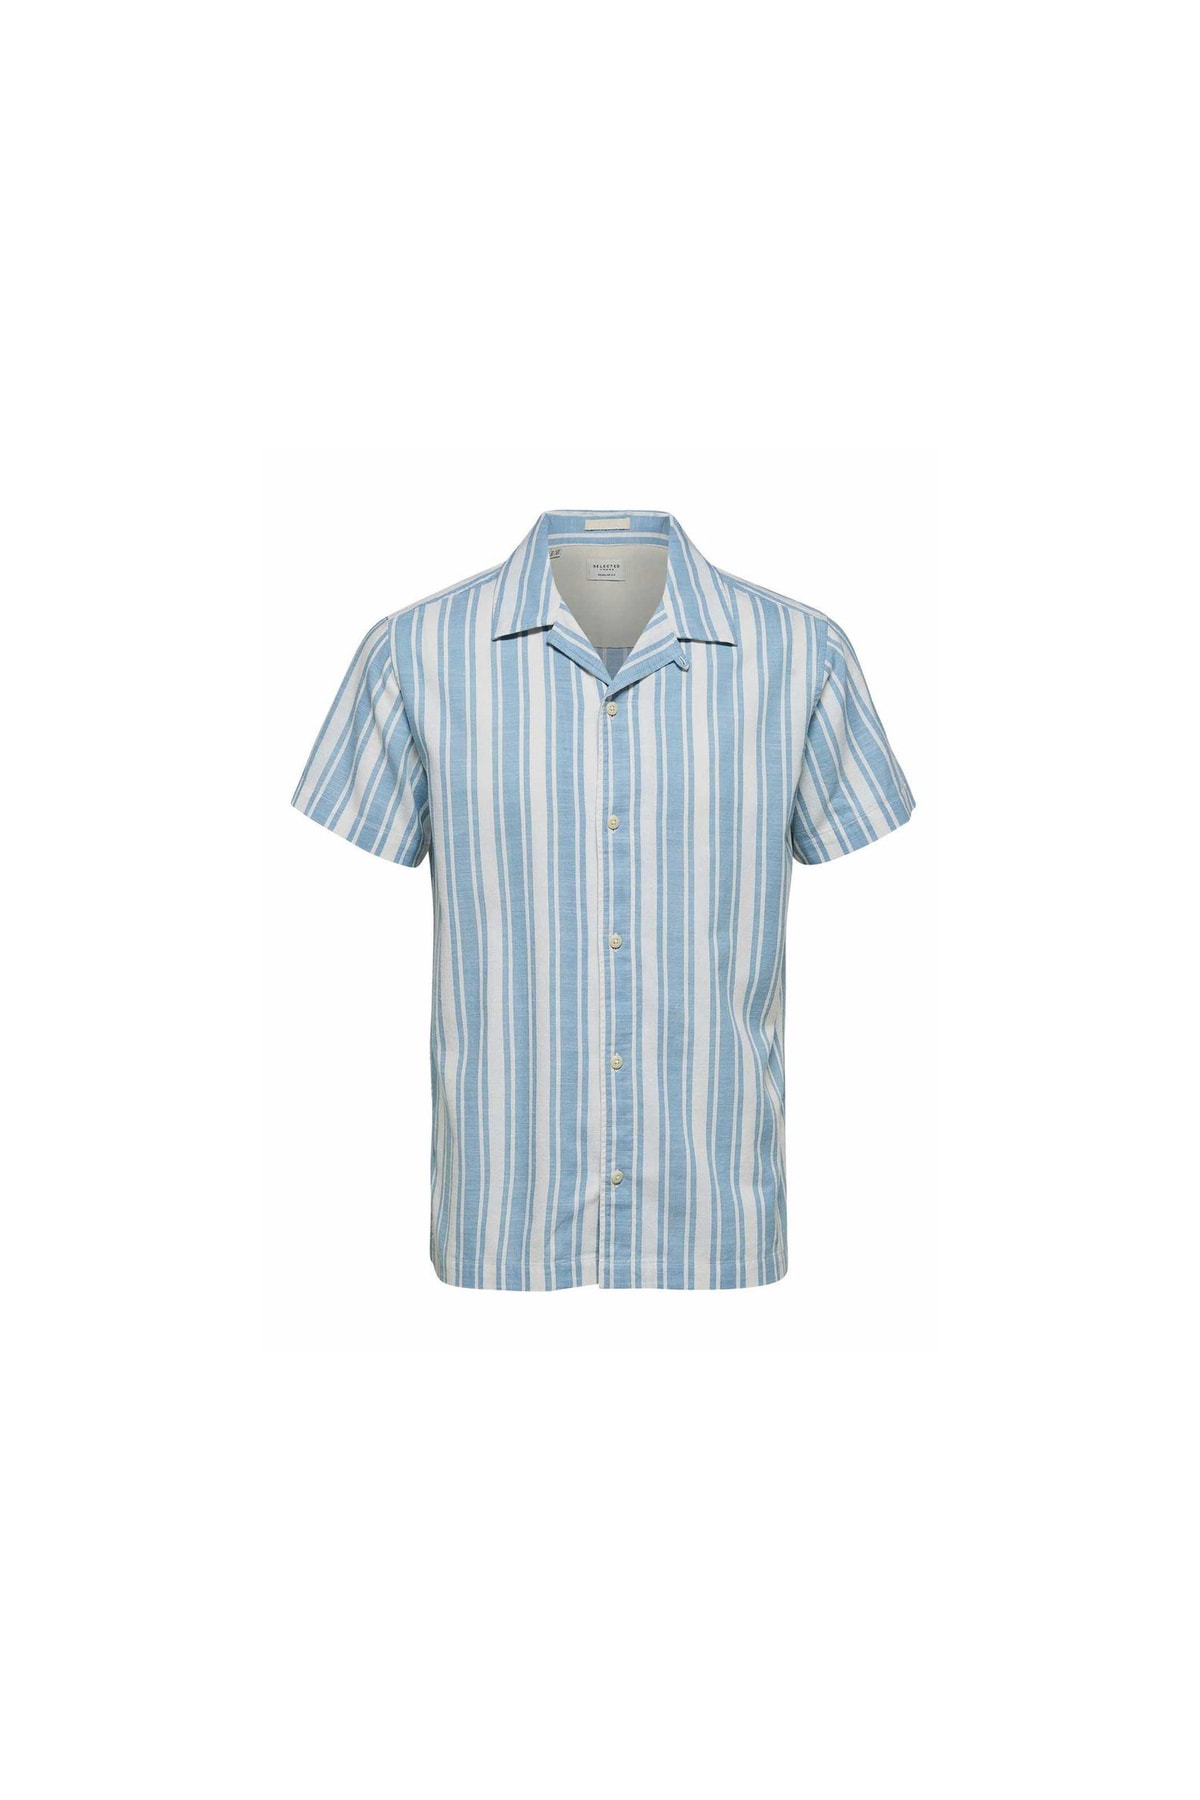 Marc O'Polo Hemd Blau Regular Fit Fast ausverkauft